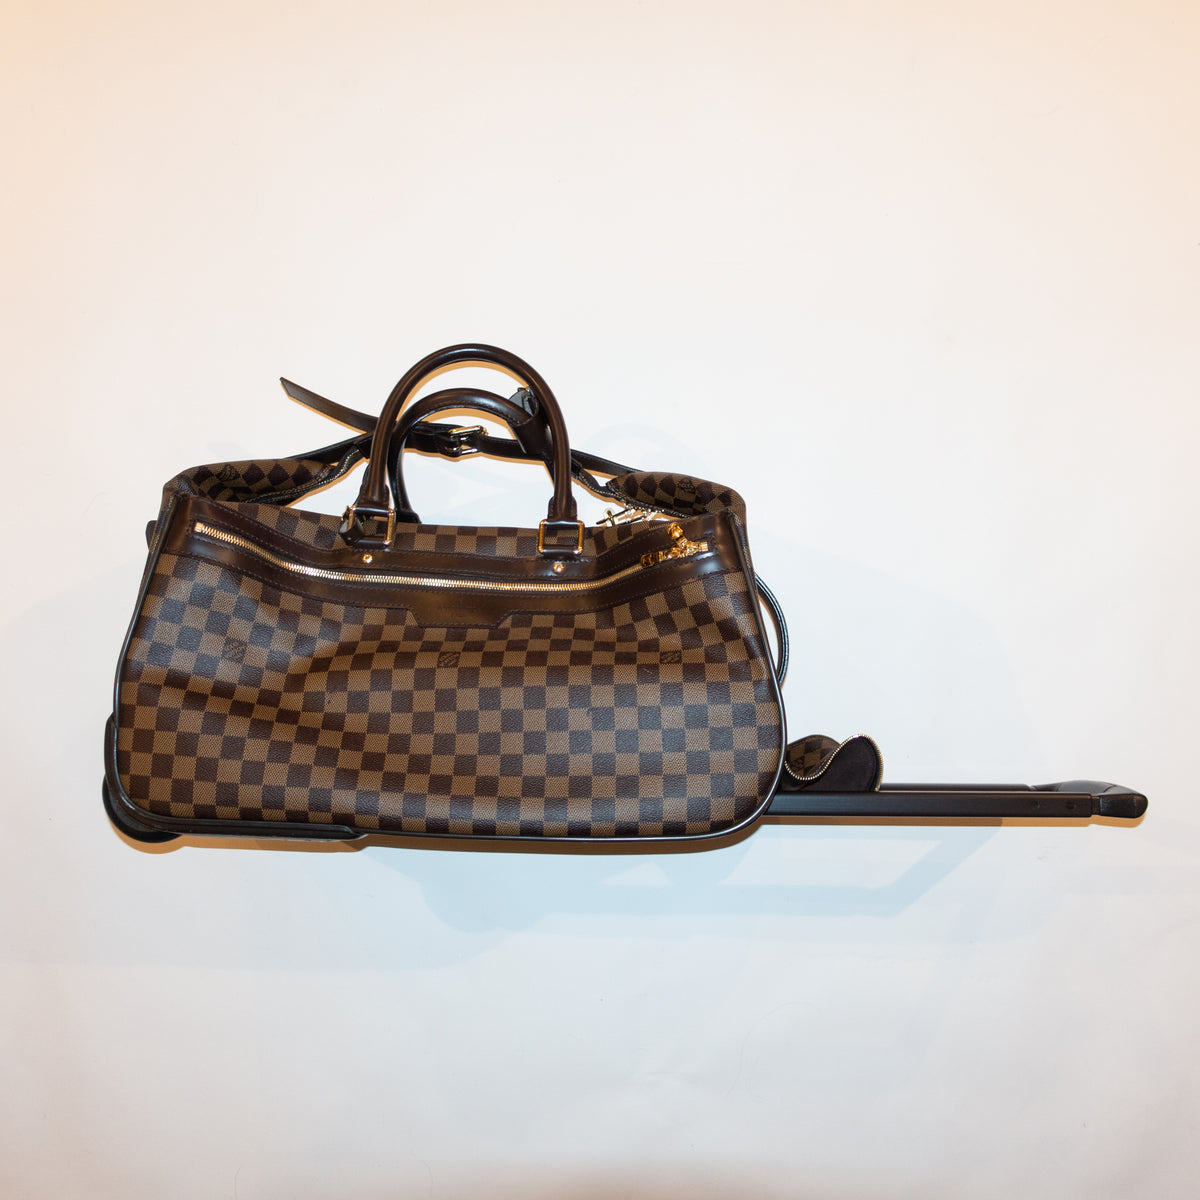 Louis Vuitton Rolling Duffel Bag - Roller Auctions